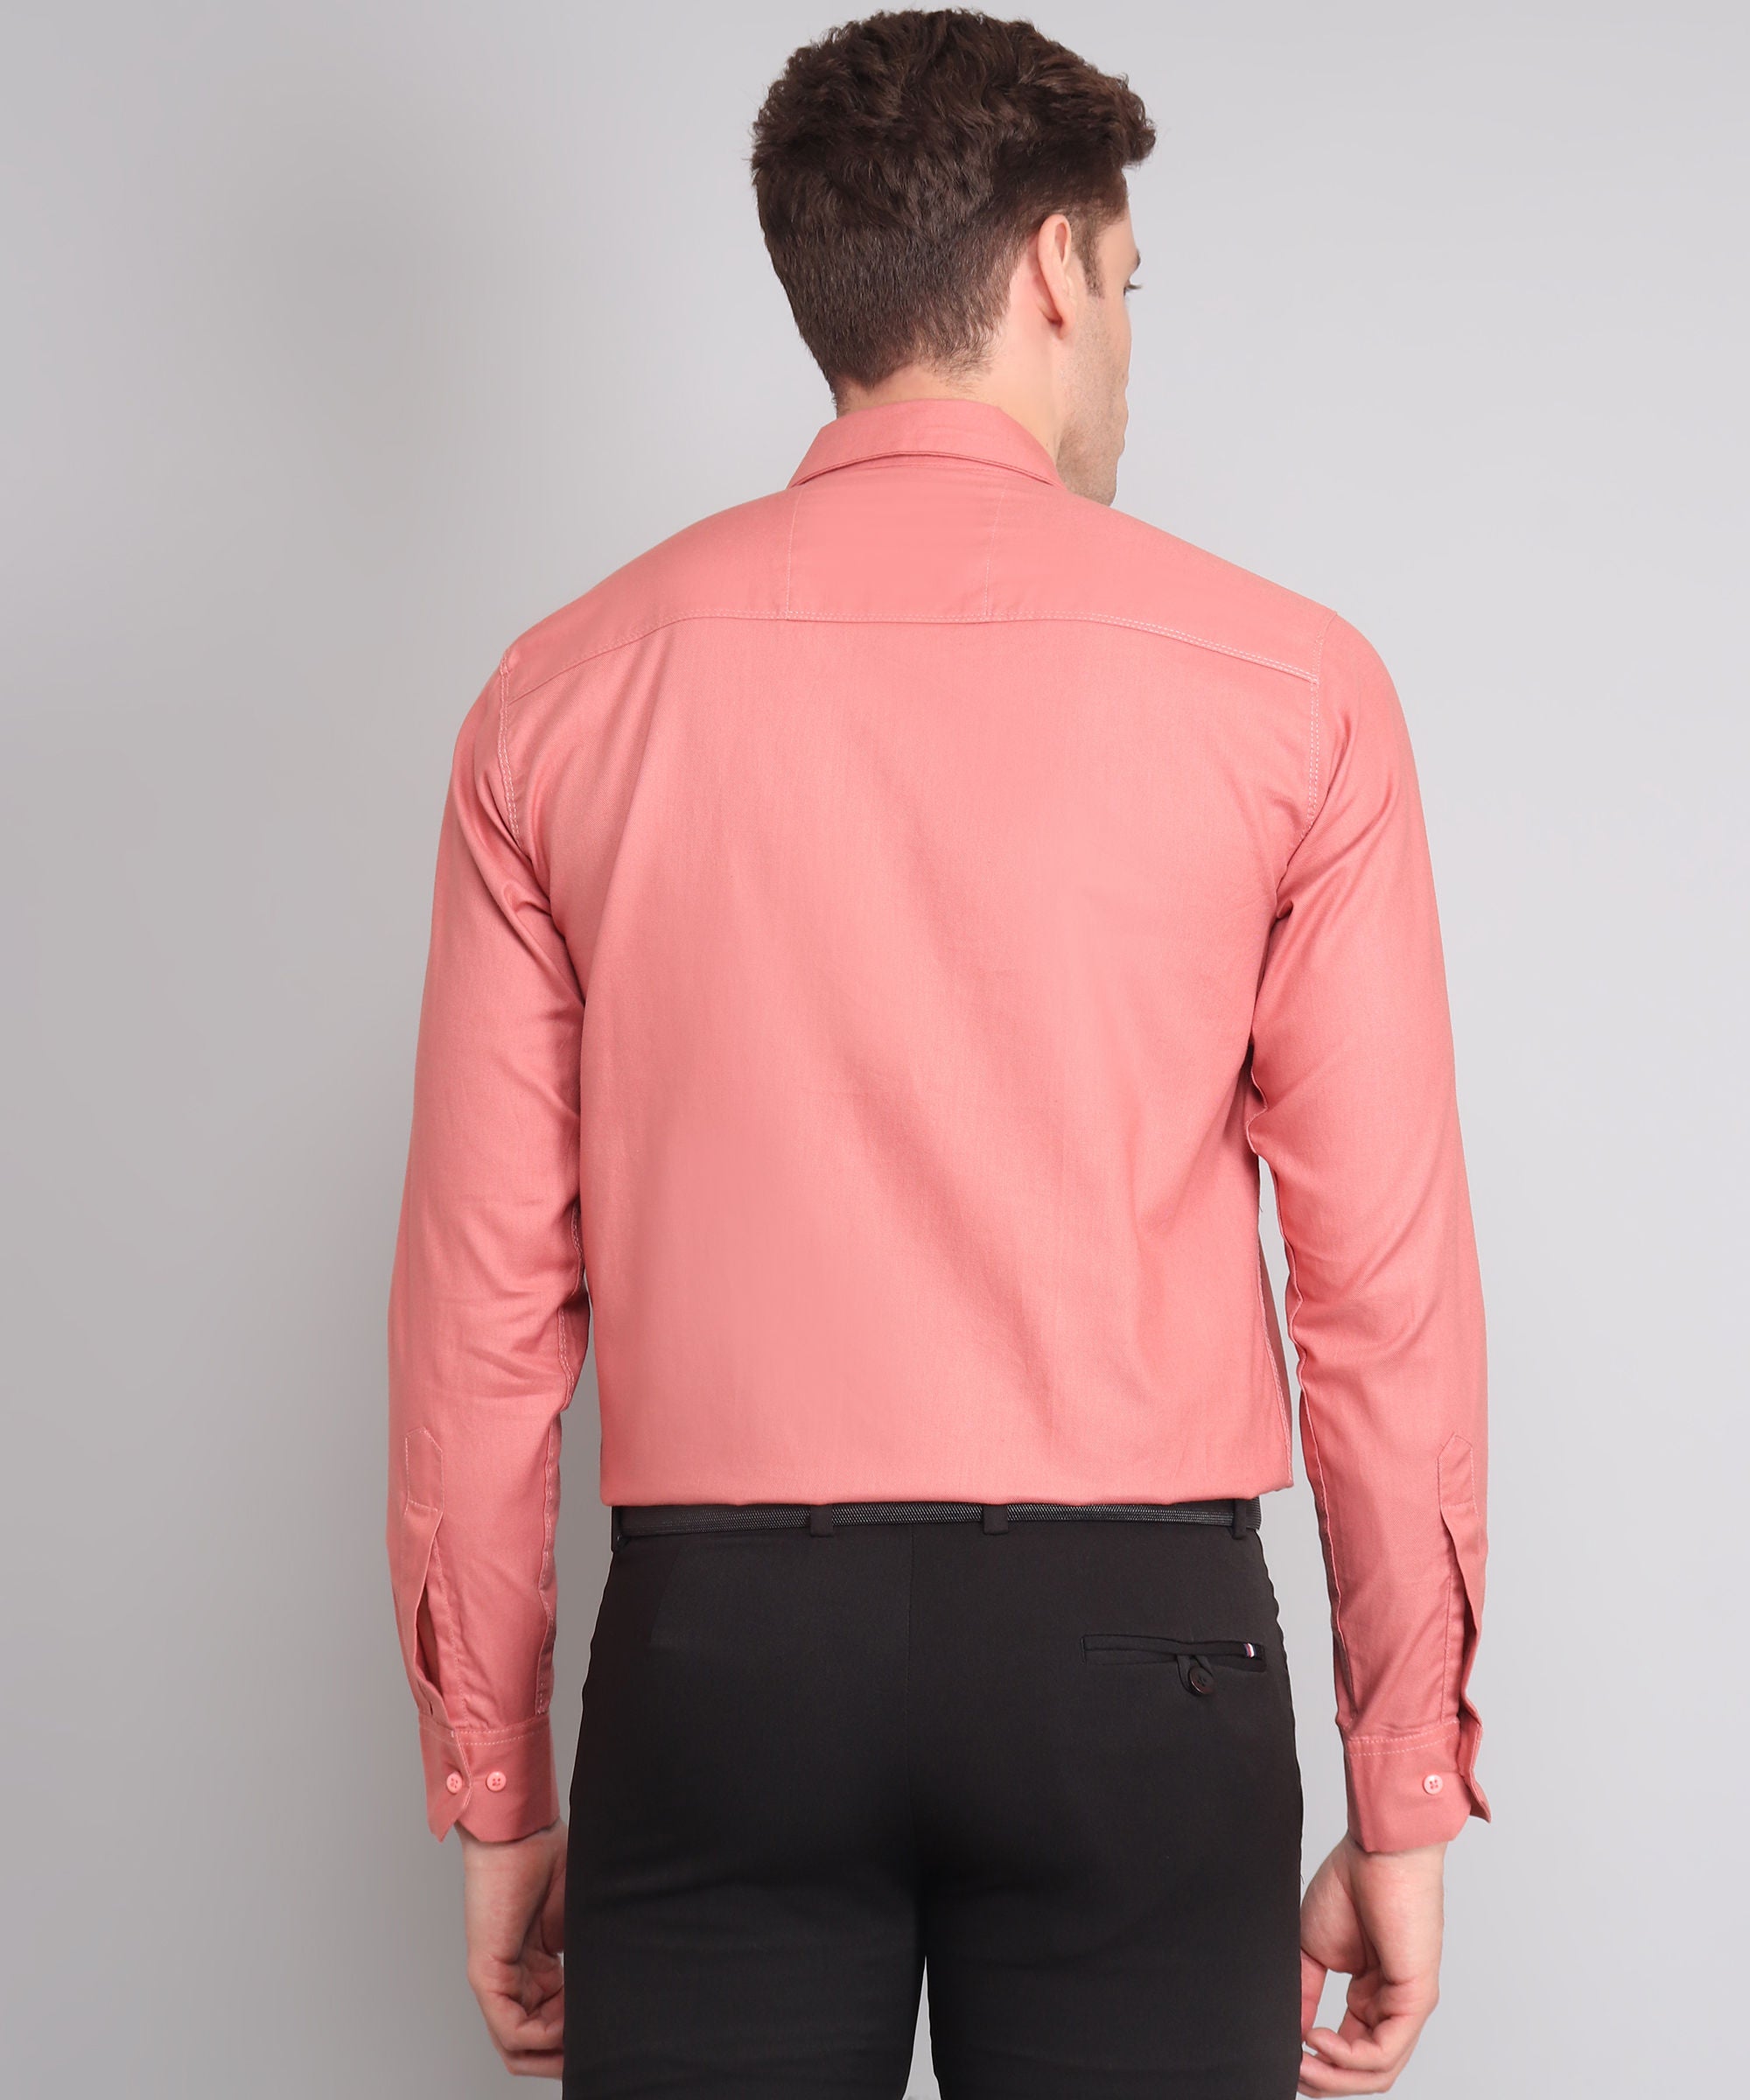 Exclusive TryBuy Premium Peach Dress Shirt for Men